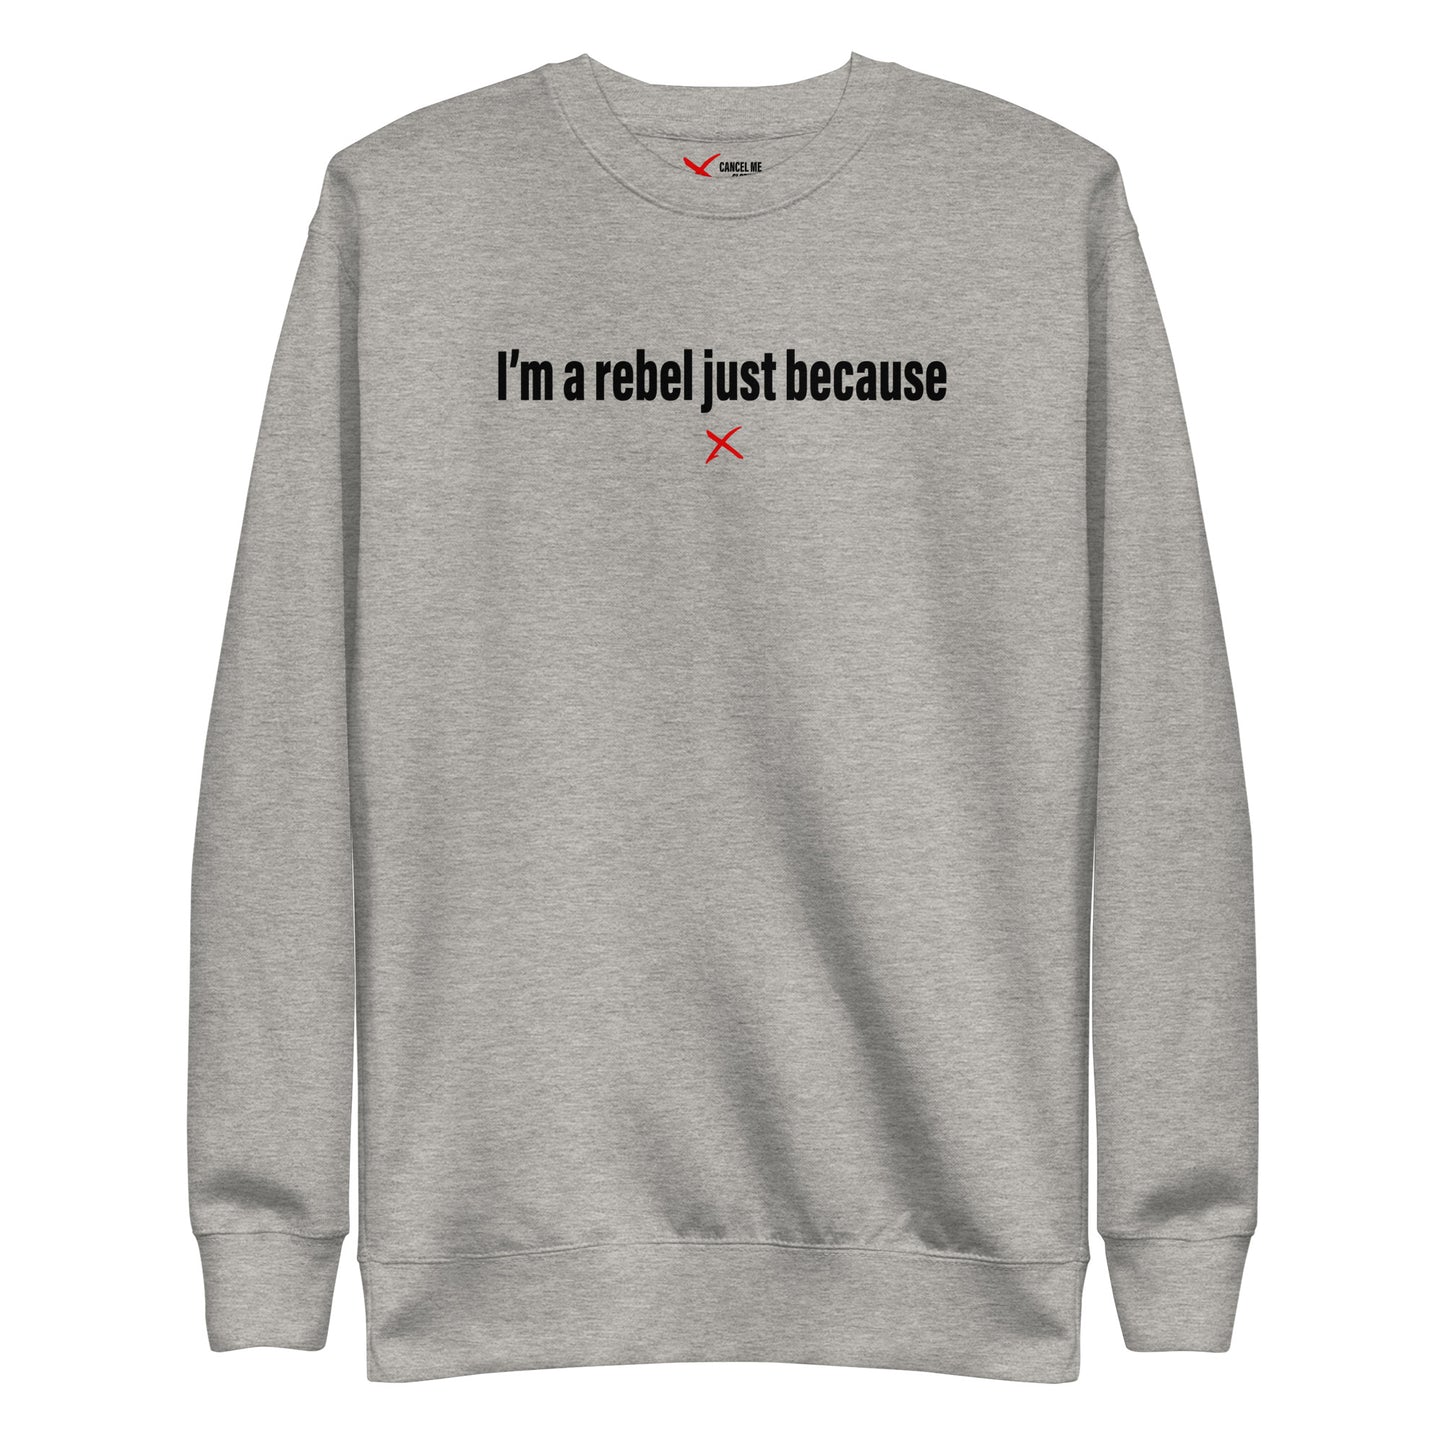 I'm a rebel just because - Sweatshirt